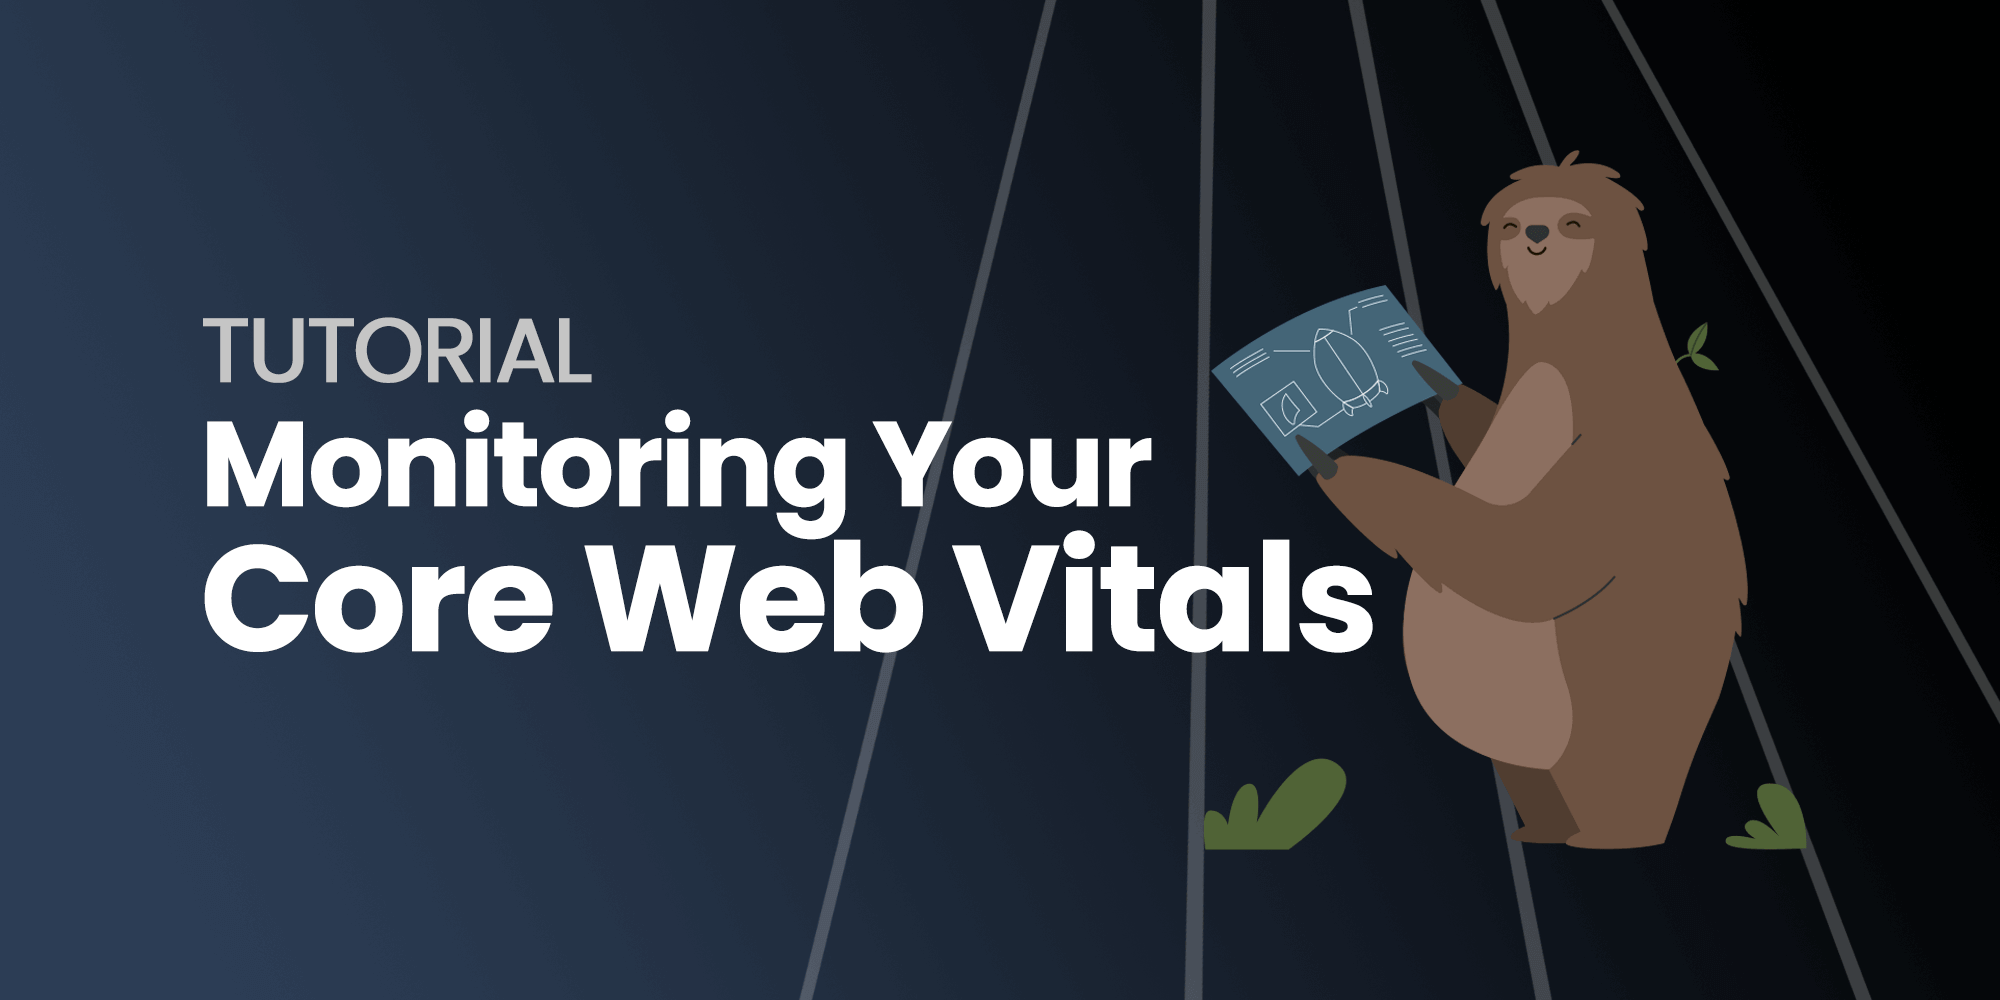 Tutorial: Monitoring Your Core Web Vitals